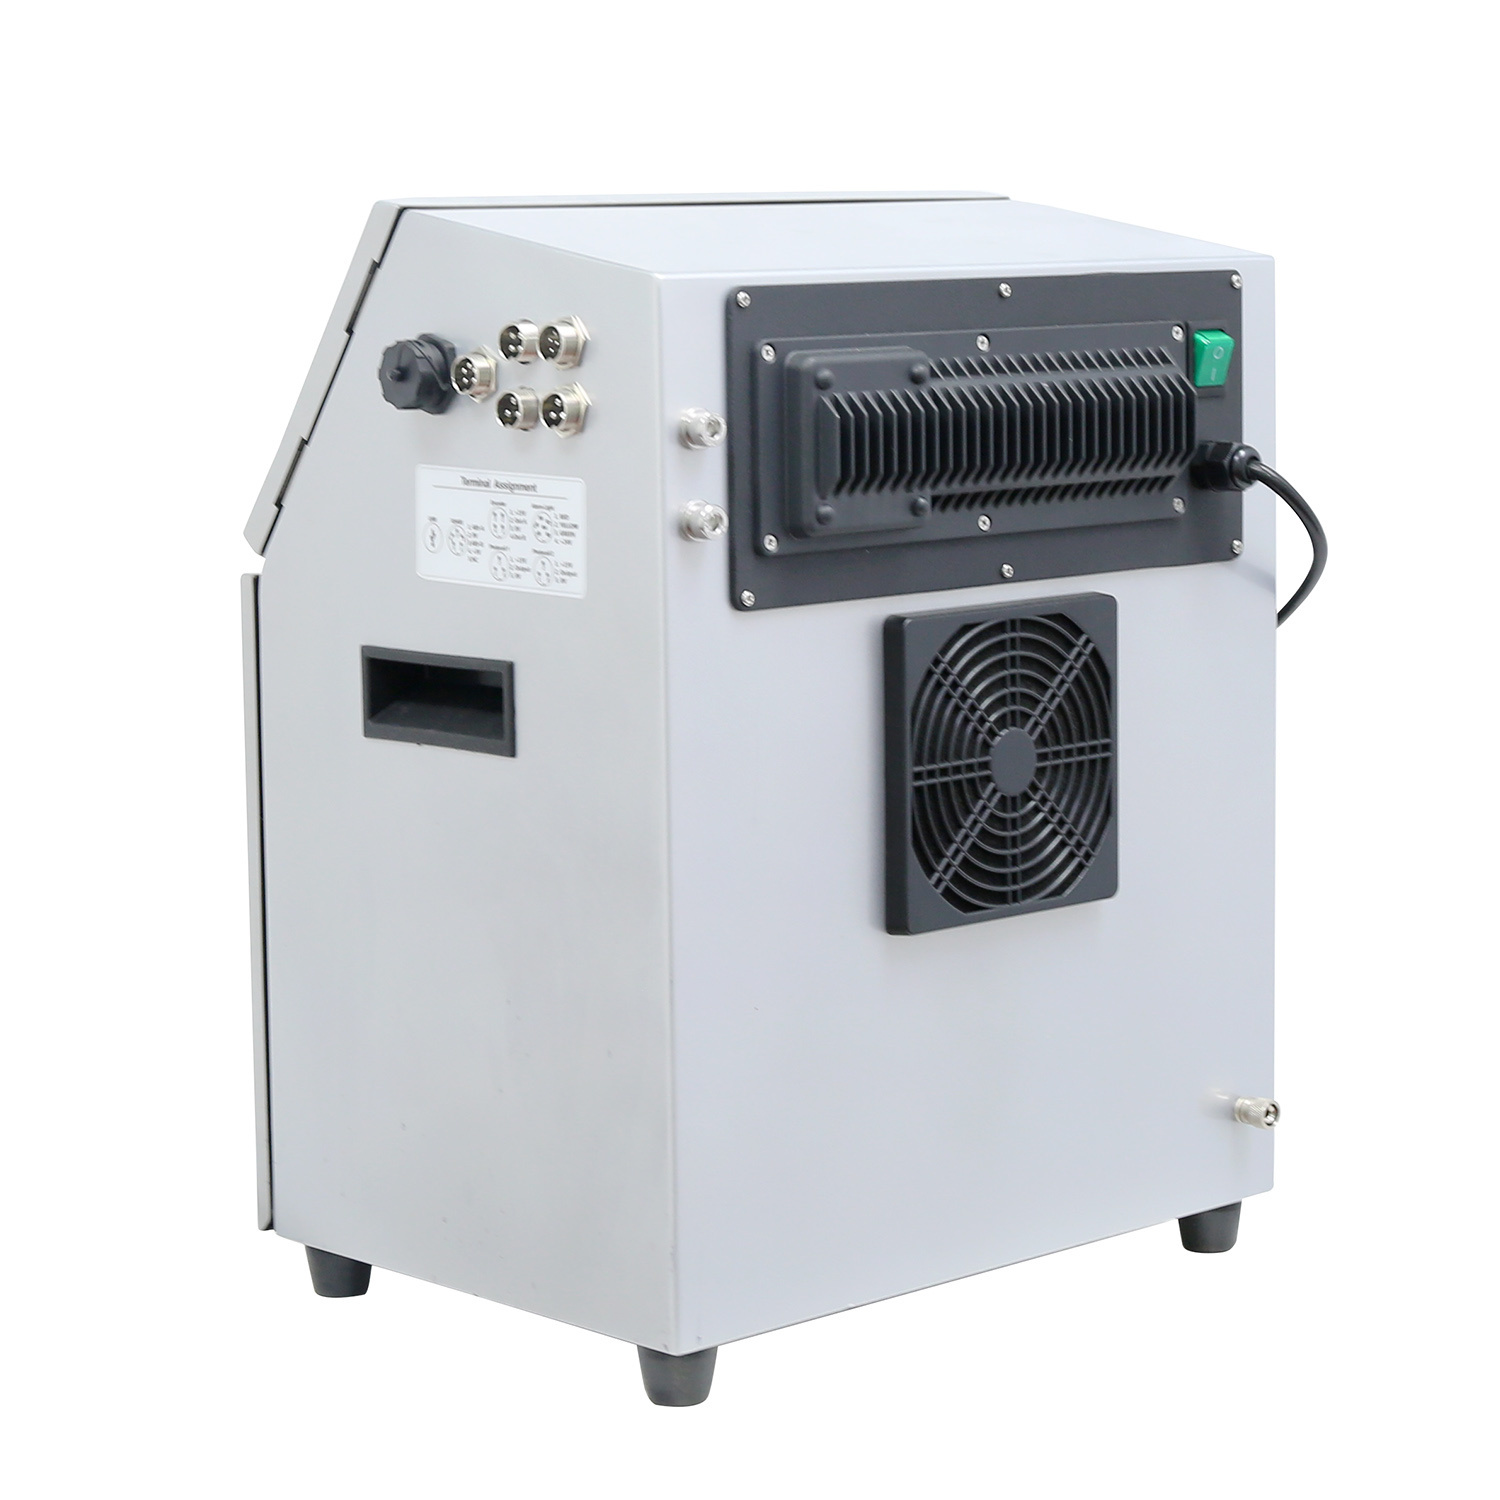 Leadtech Lt800 Inkjet Printing Machine Barcode Printer